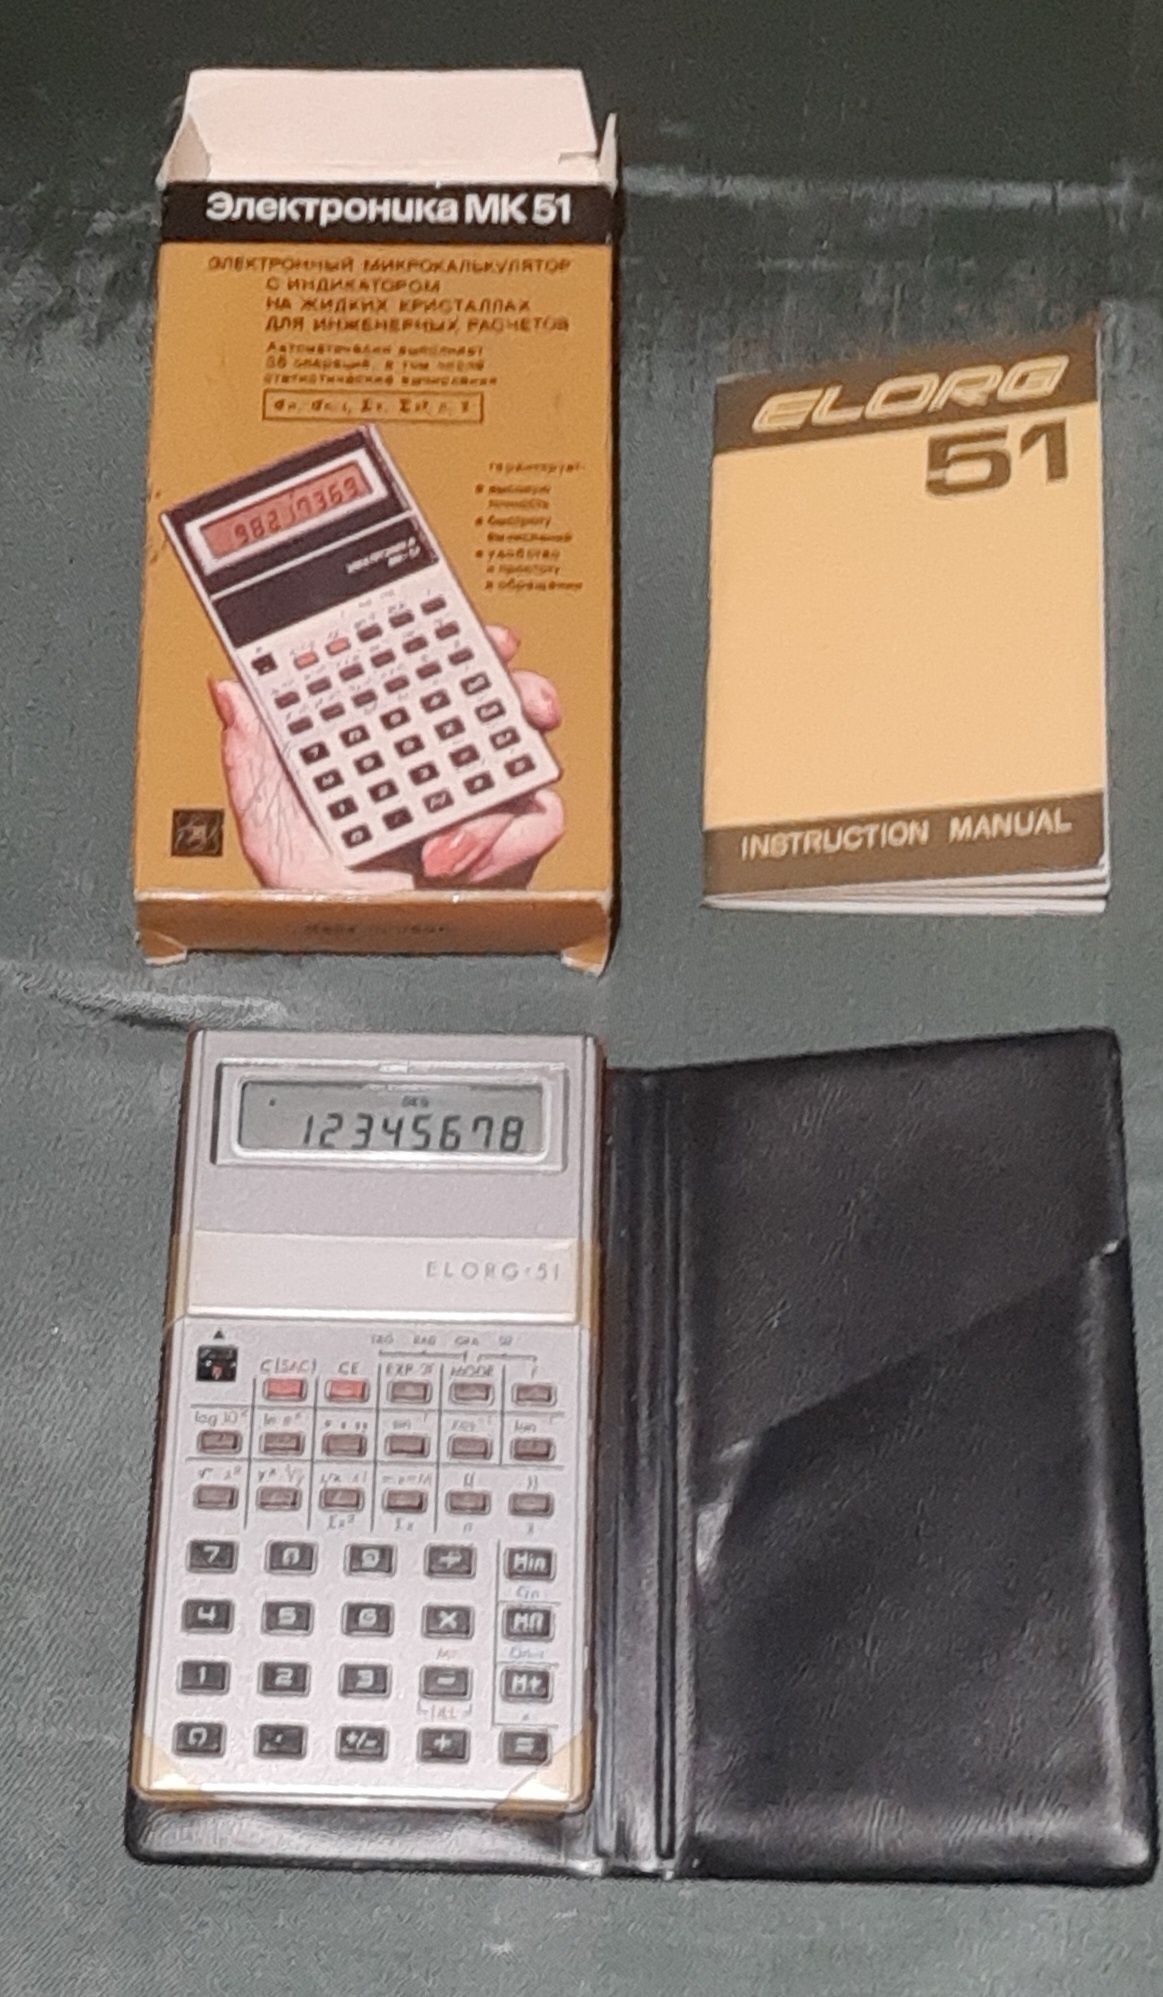 Kalkulator elgor 51